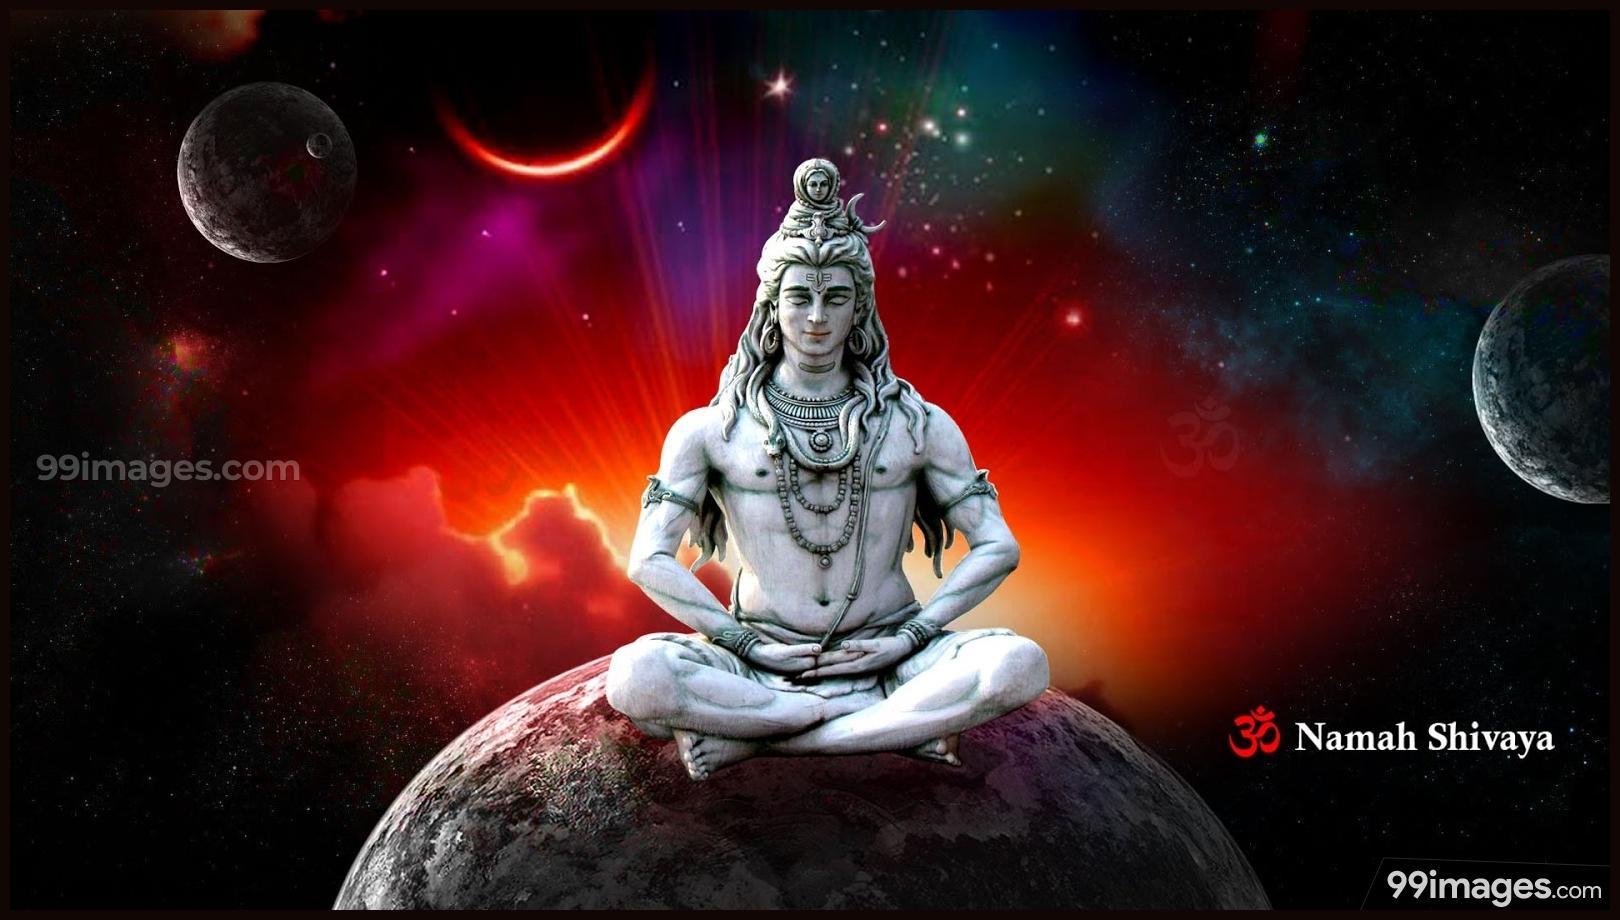 60Lord Shiva Best HD Photo (1080p) (2019)